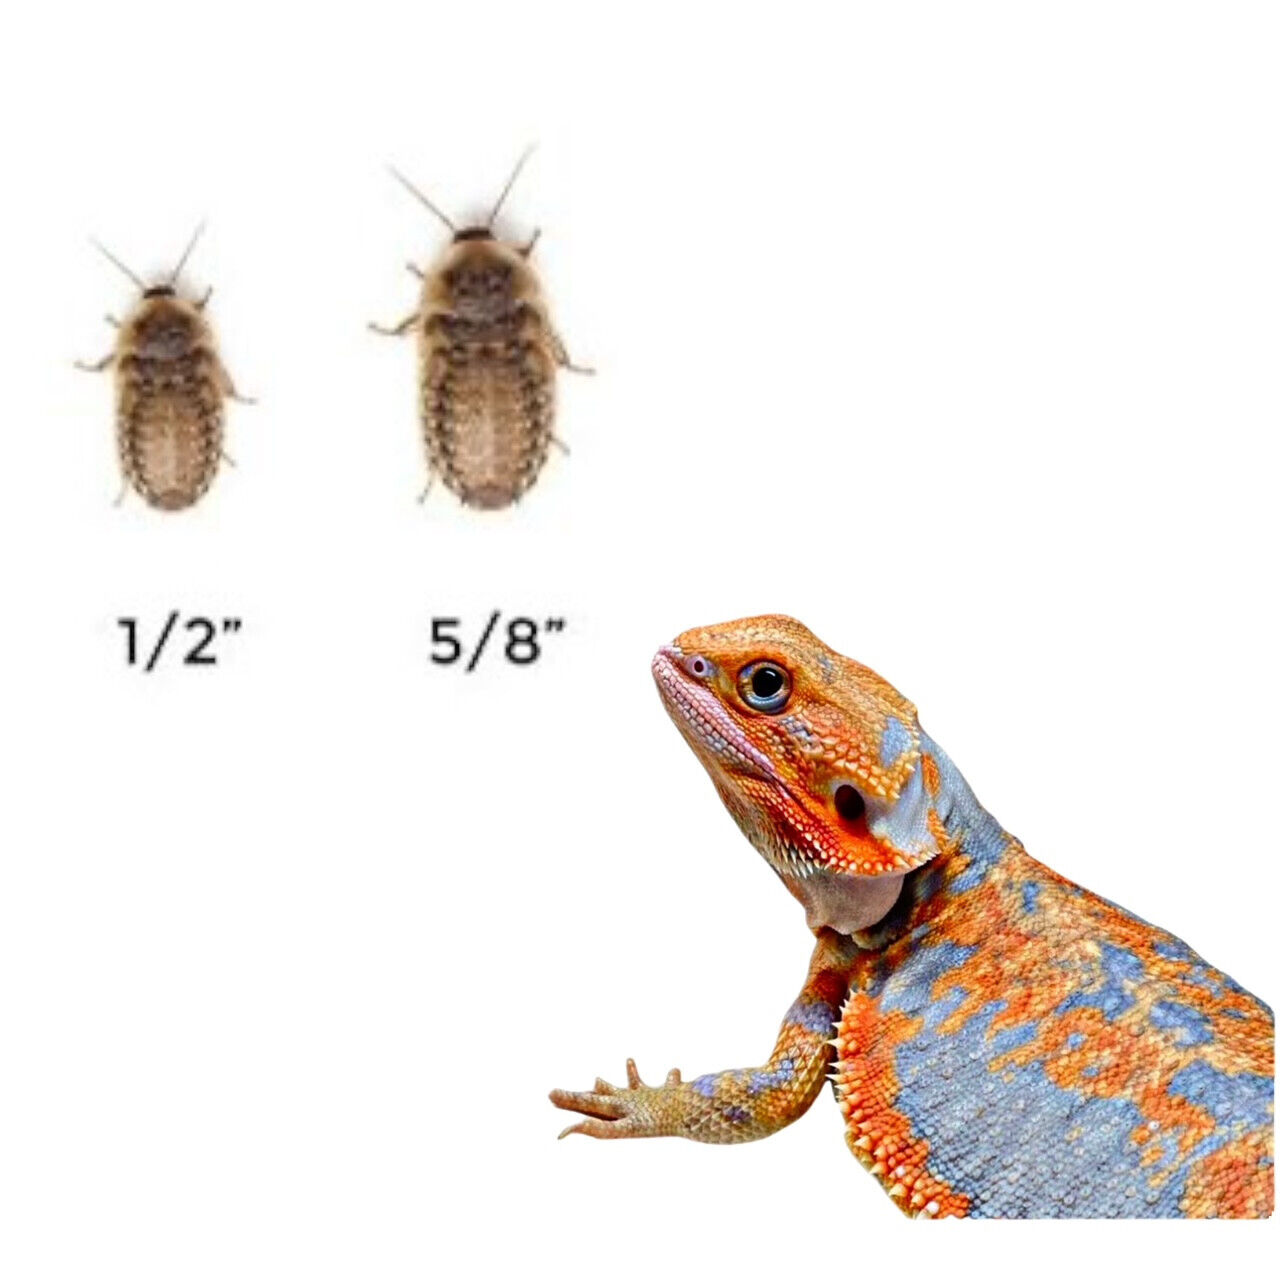 Medium Dubia Roaches 1/2”-5/8” 50 Counts - 1000 Counts  + 10% EXTRA